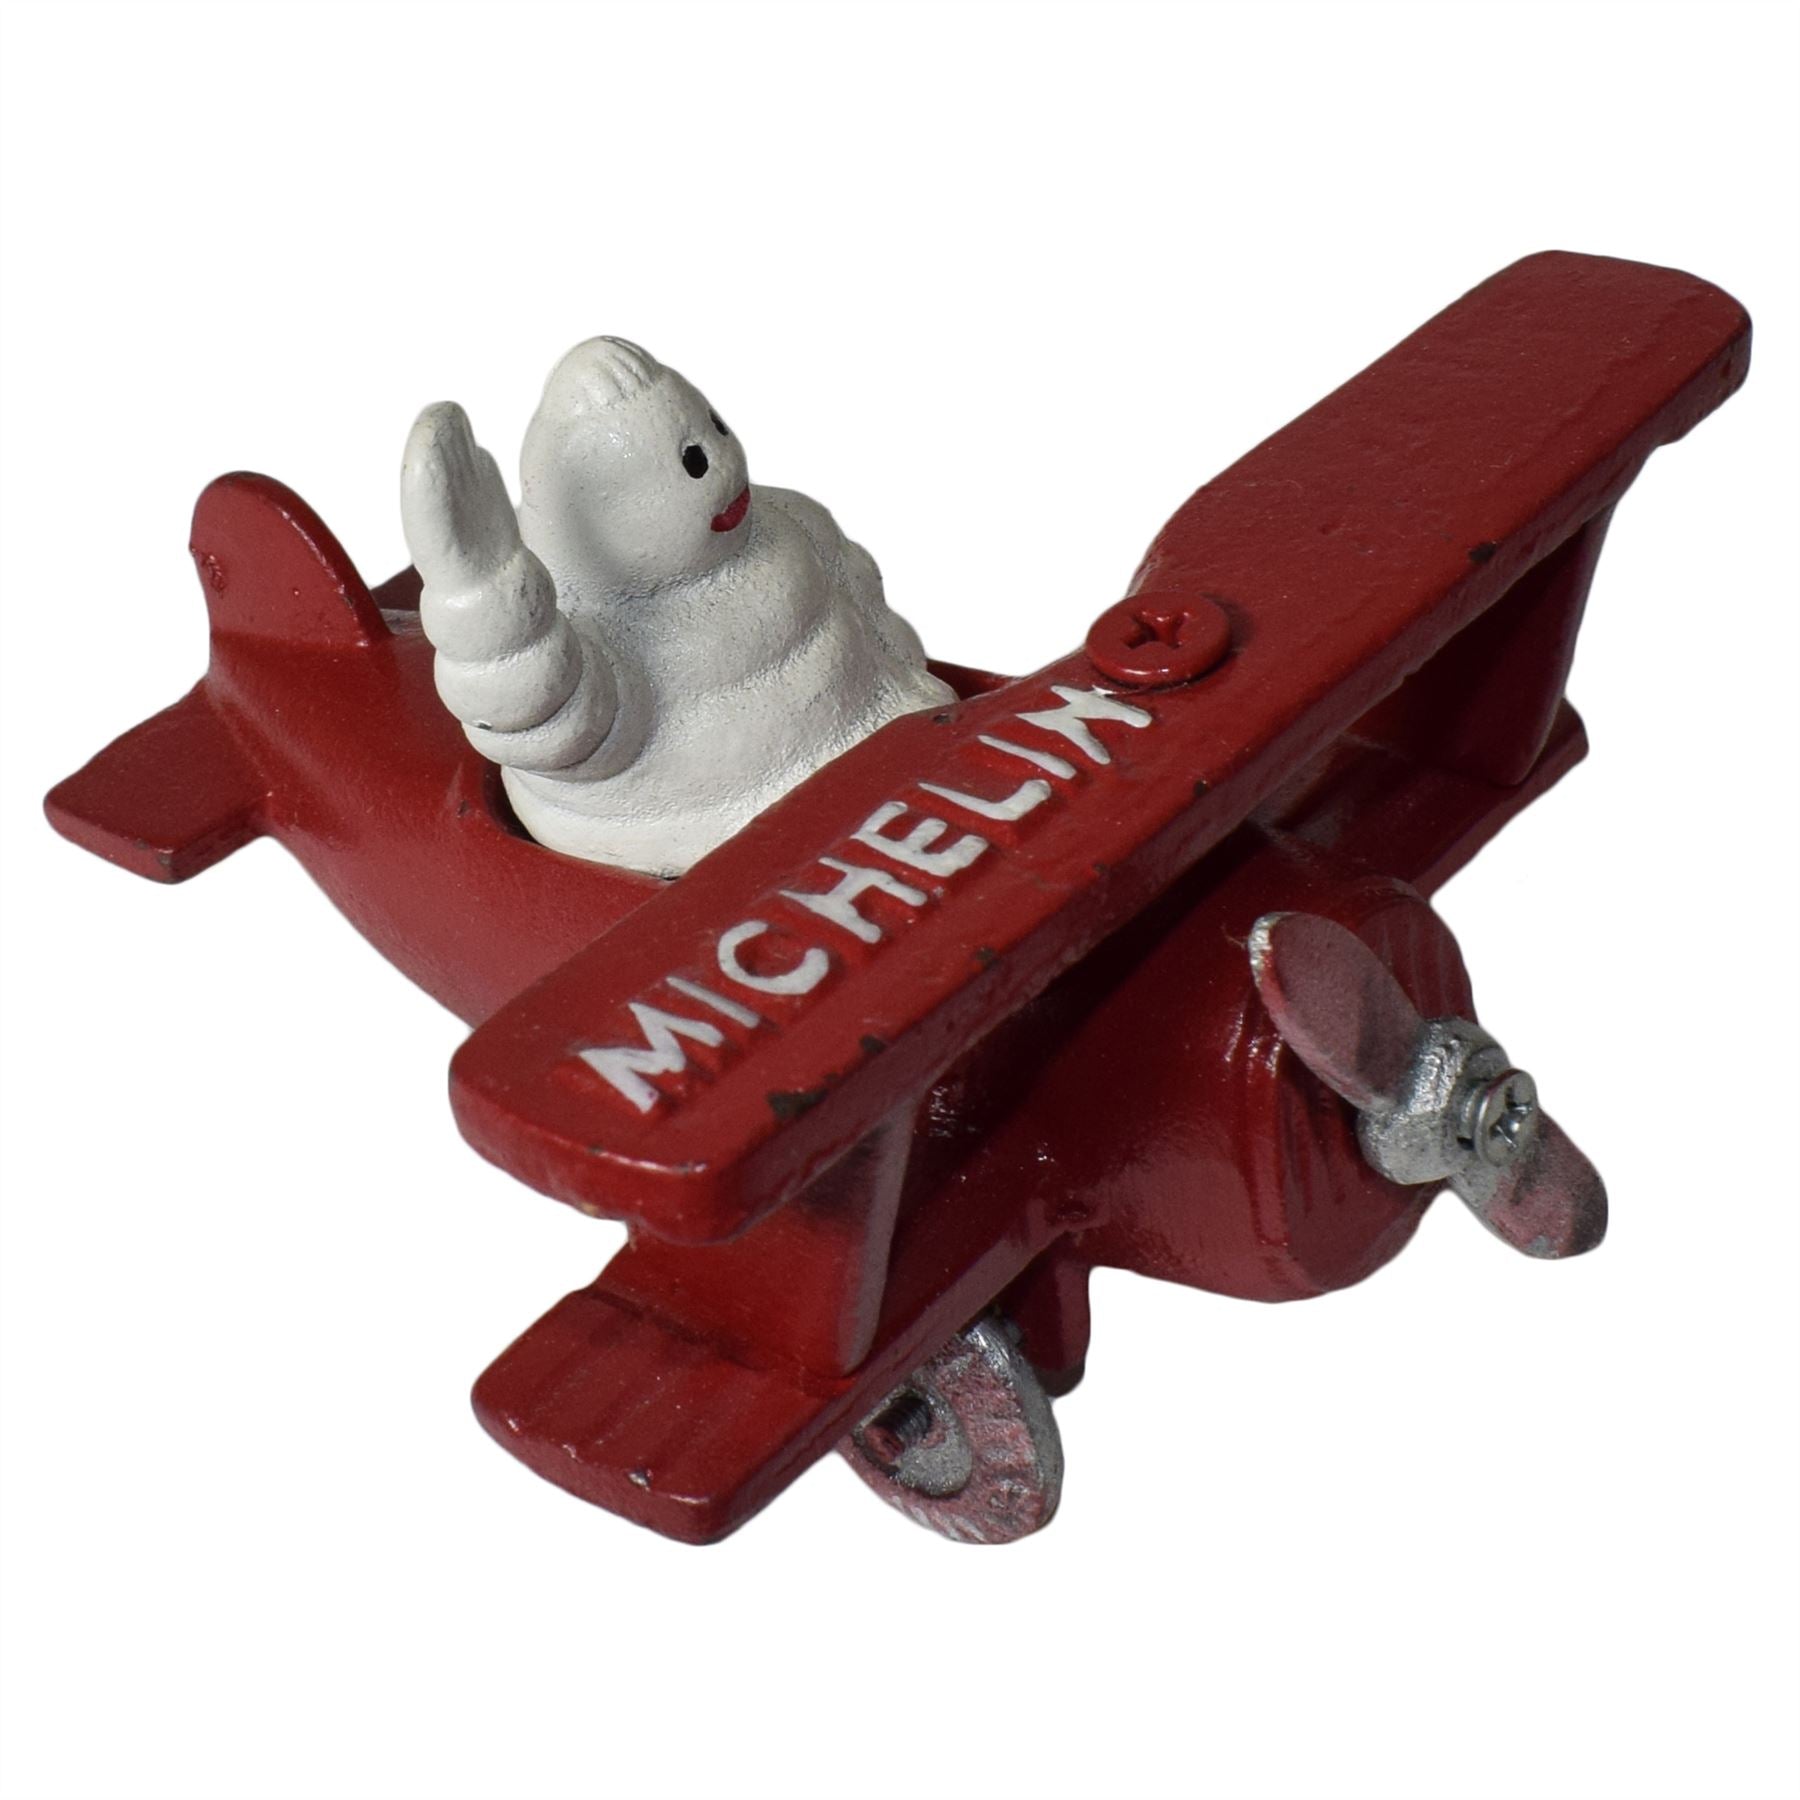 Michelin Man In Airplane Plane Mascot Figure Statue Bibendum Figurine Cast Iron